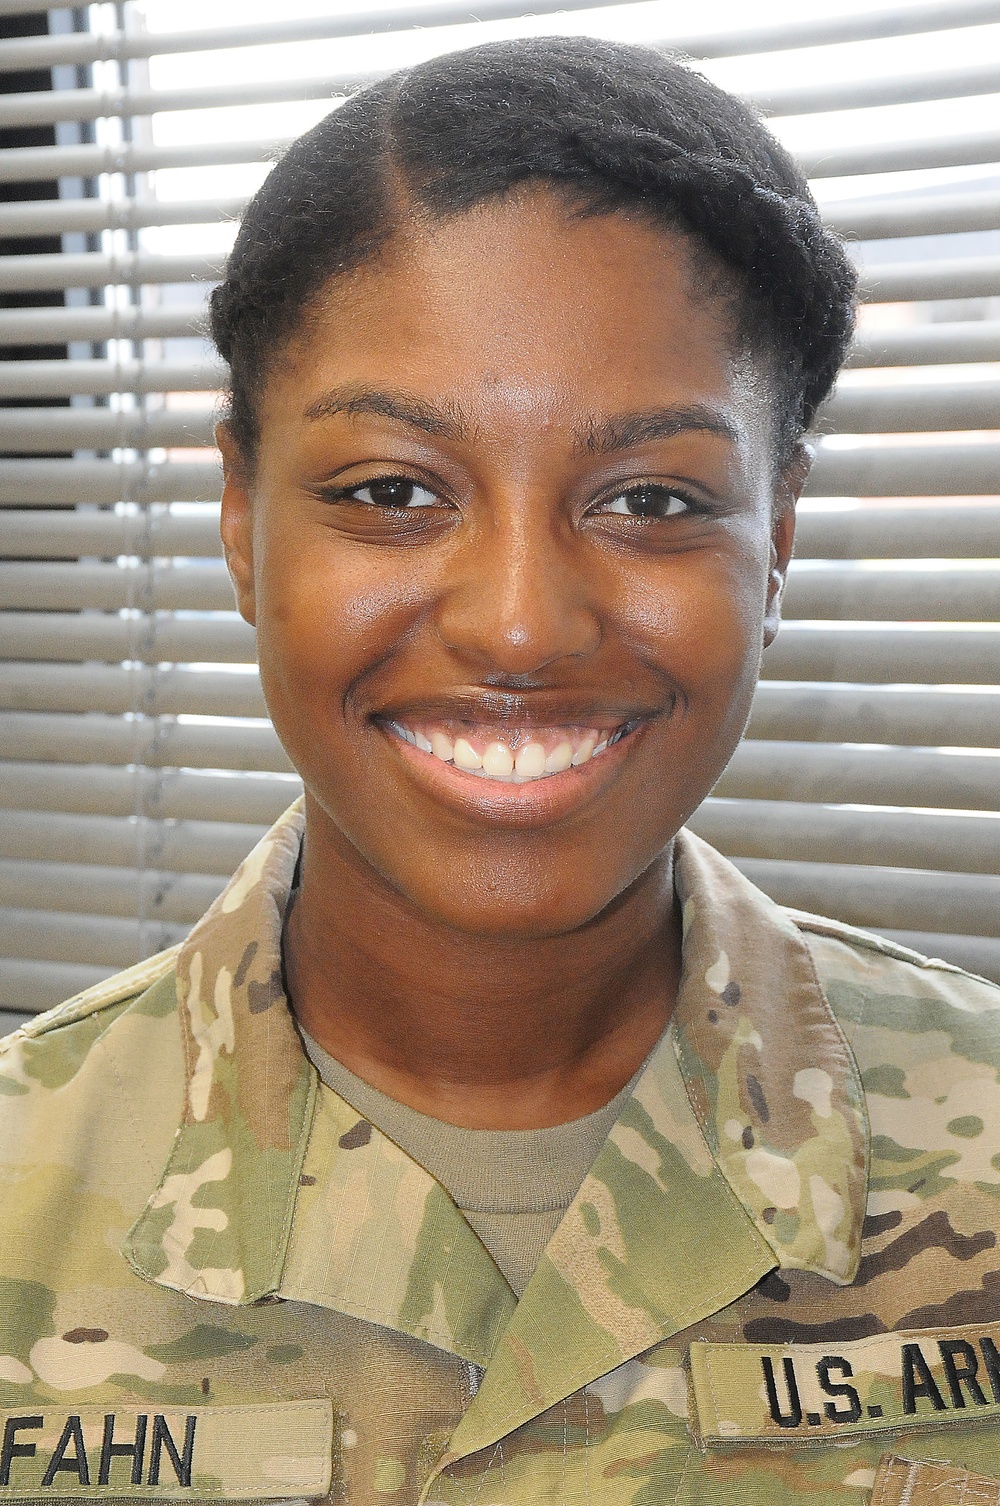 America's Military: Spc. Kellysha Fahn